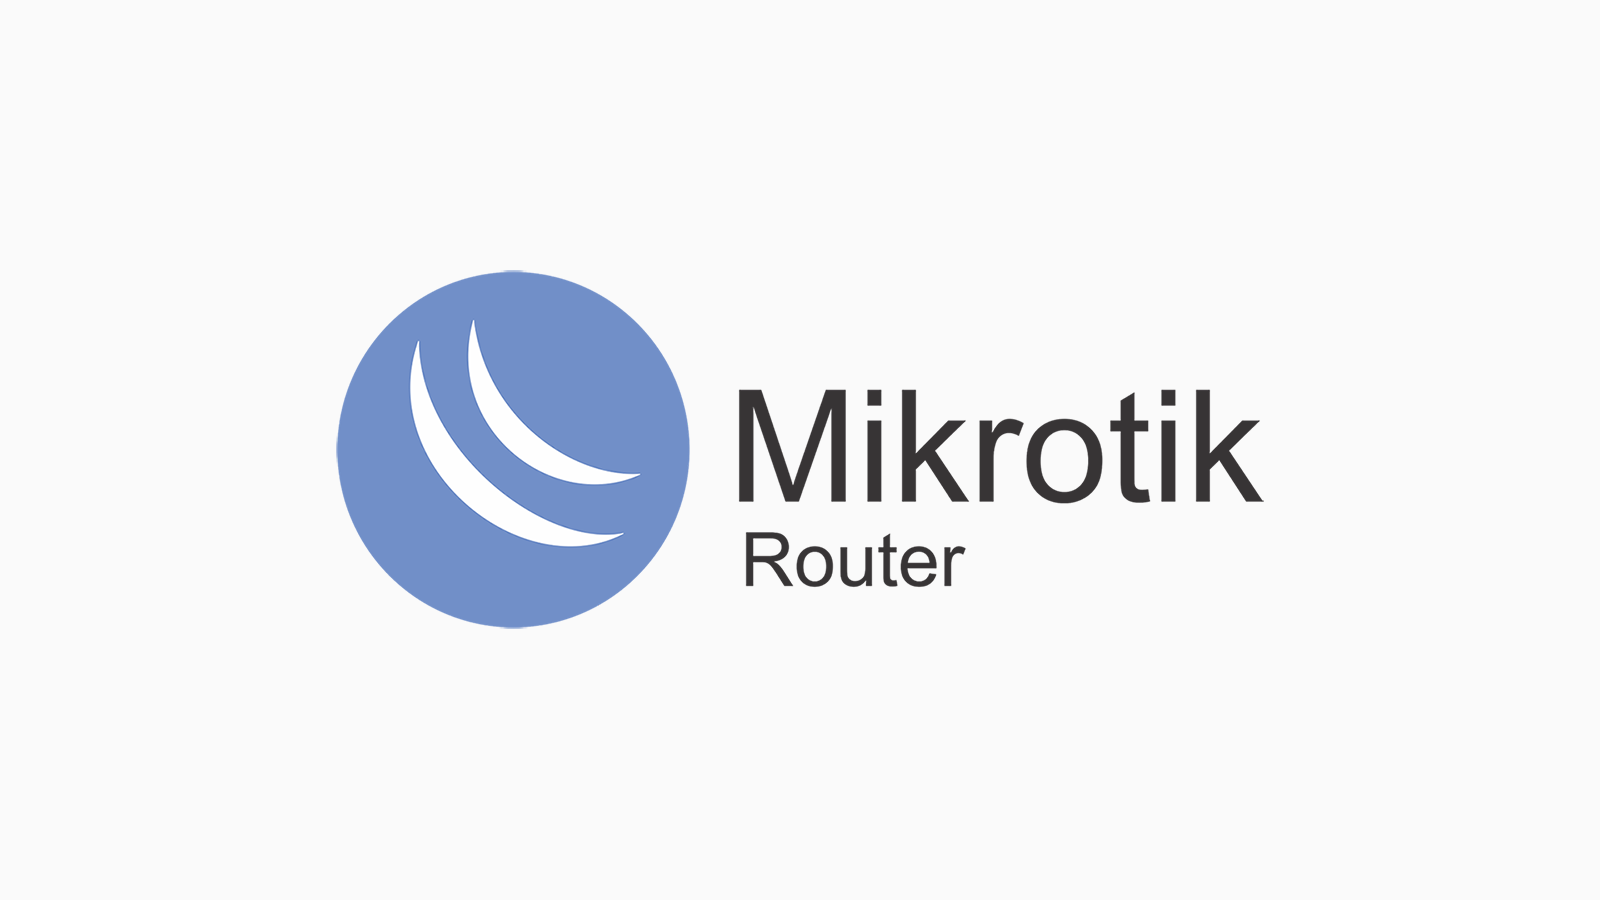 Cài đặt máy ảo Mikrotik CHR RouterOS trên Proxmox VE